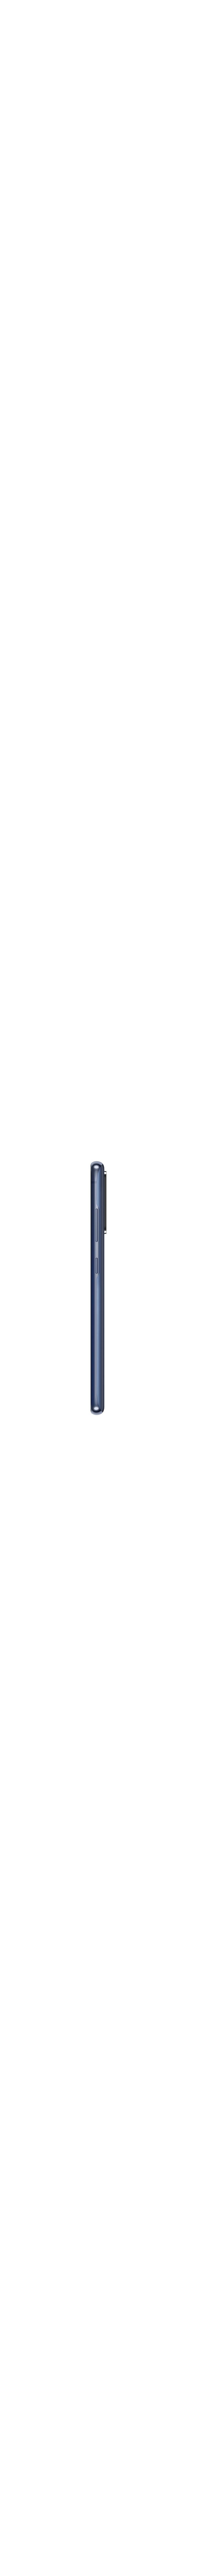 Samsung Galaxy S20 FE EU 6/128GB, Android, cloud navy blue